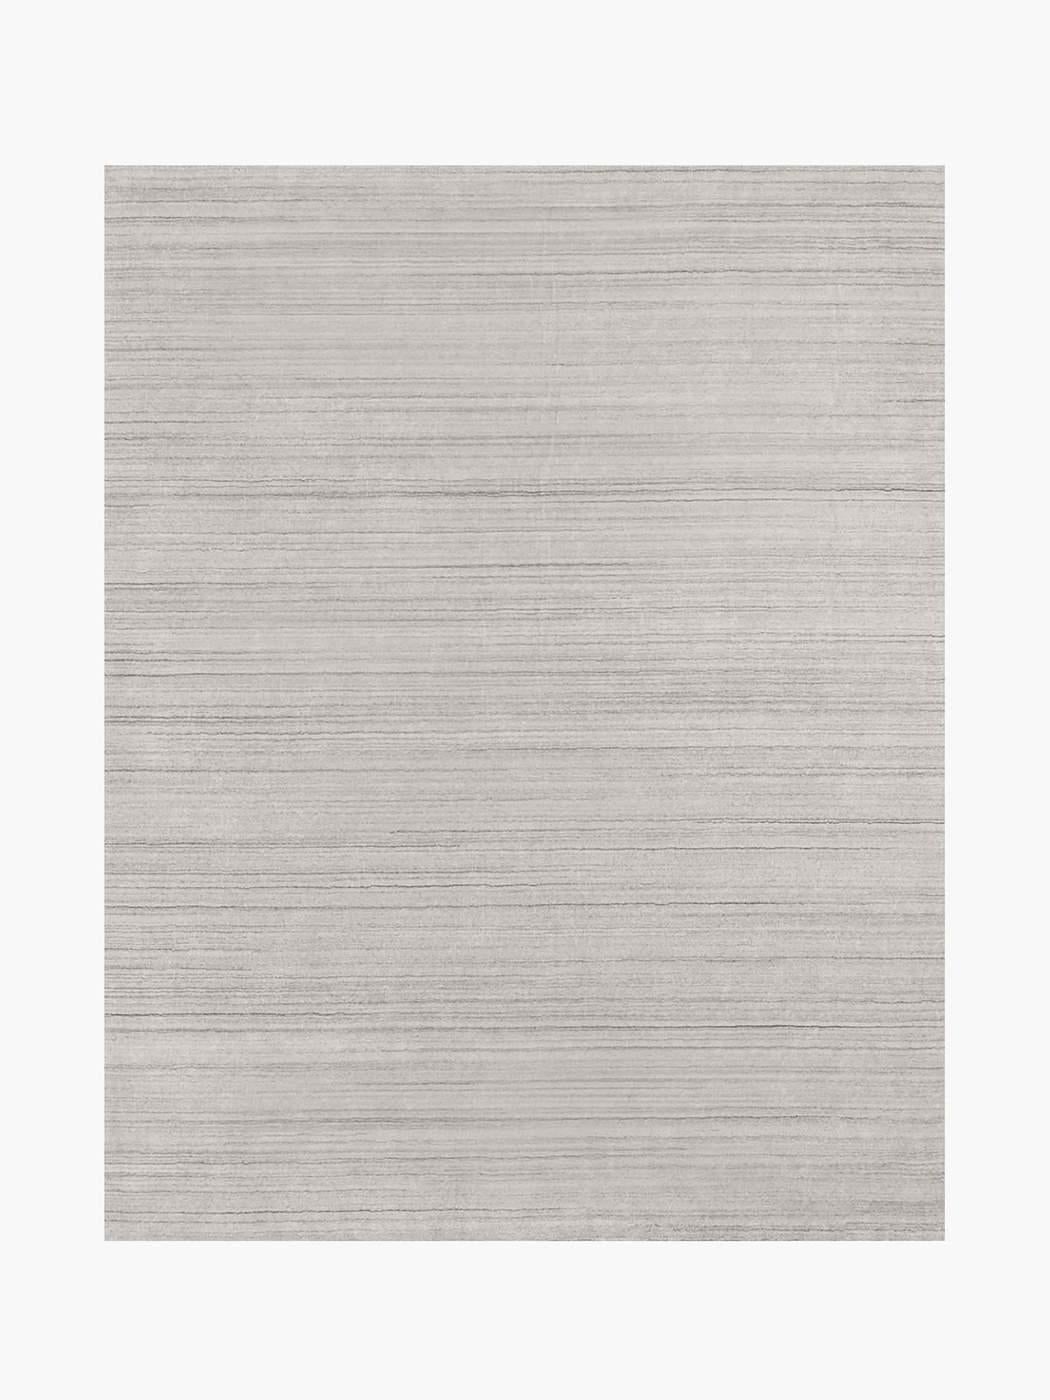 For Sale: Beige (Performance Savilla Sand) Ben Soleimani Performance Savilla Rug– Hand-knotted Medium Pile White 12'x15'